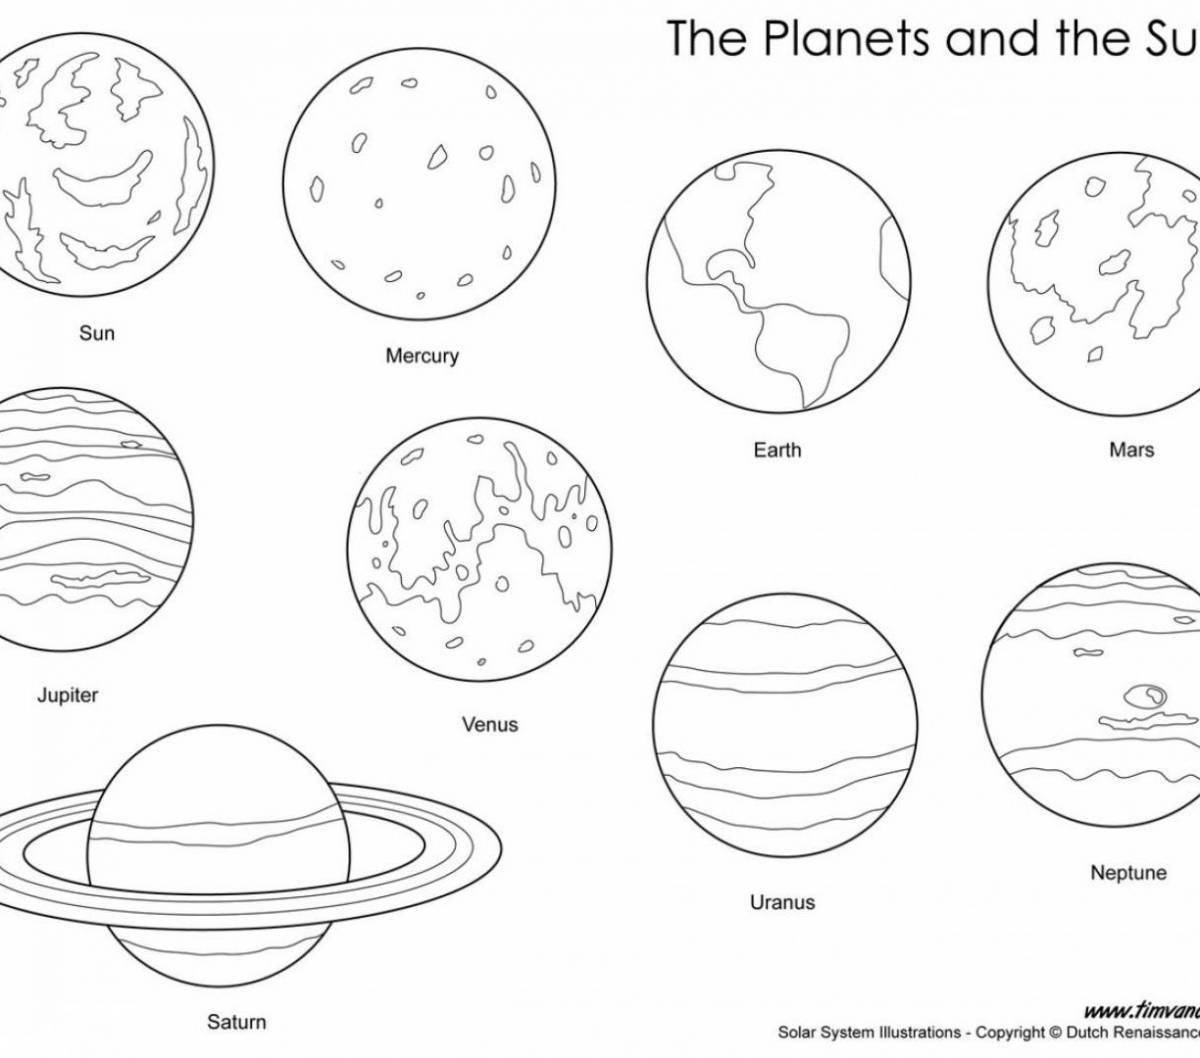 Joyful solar system coloring book for kids